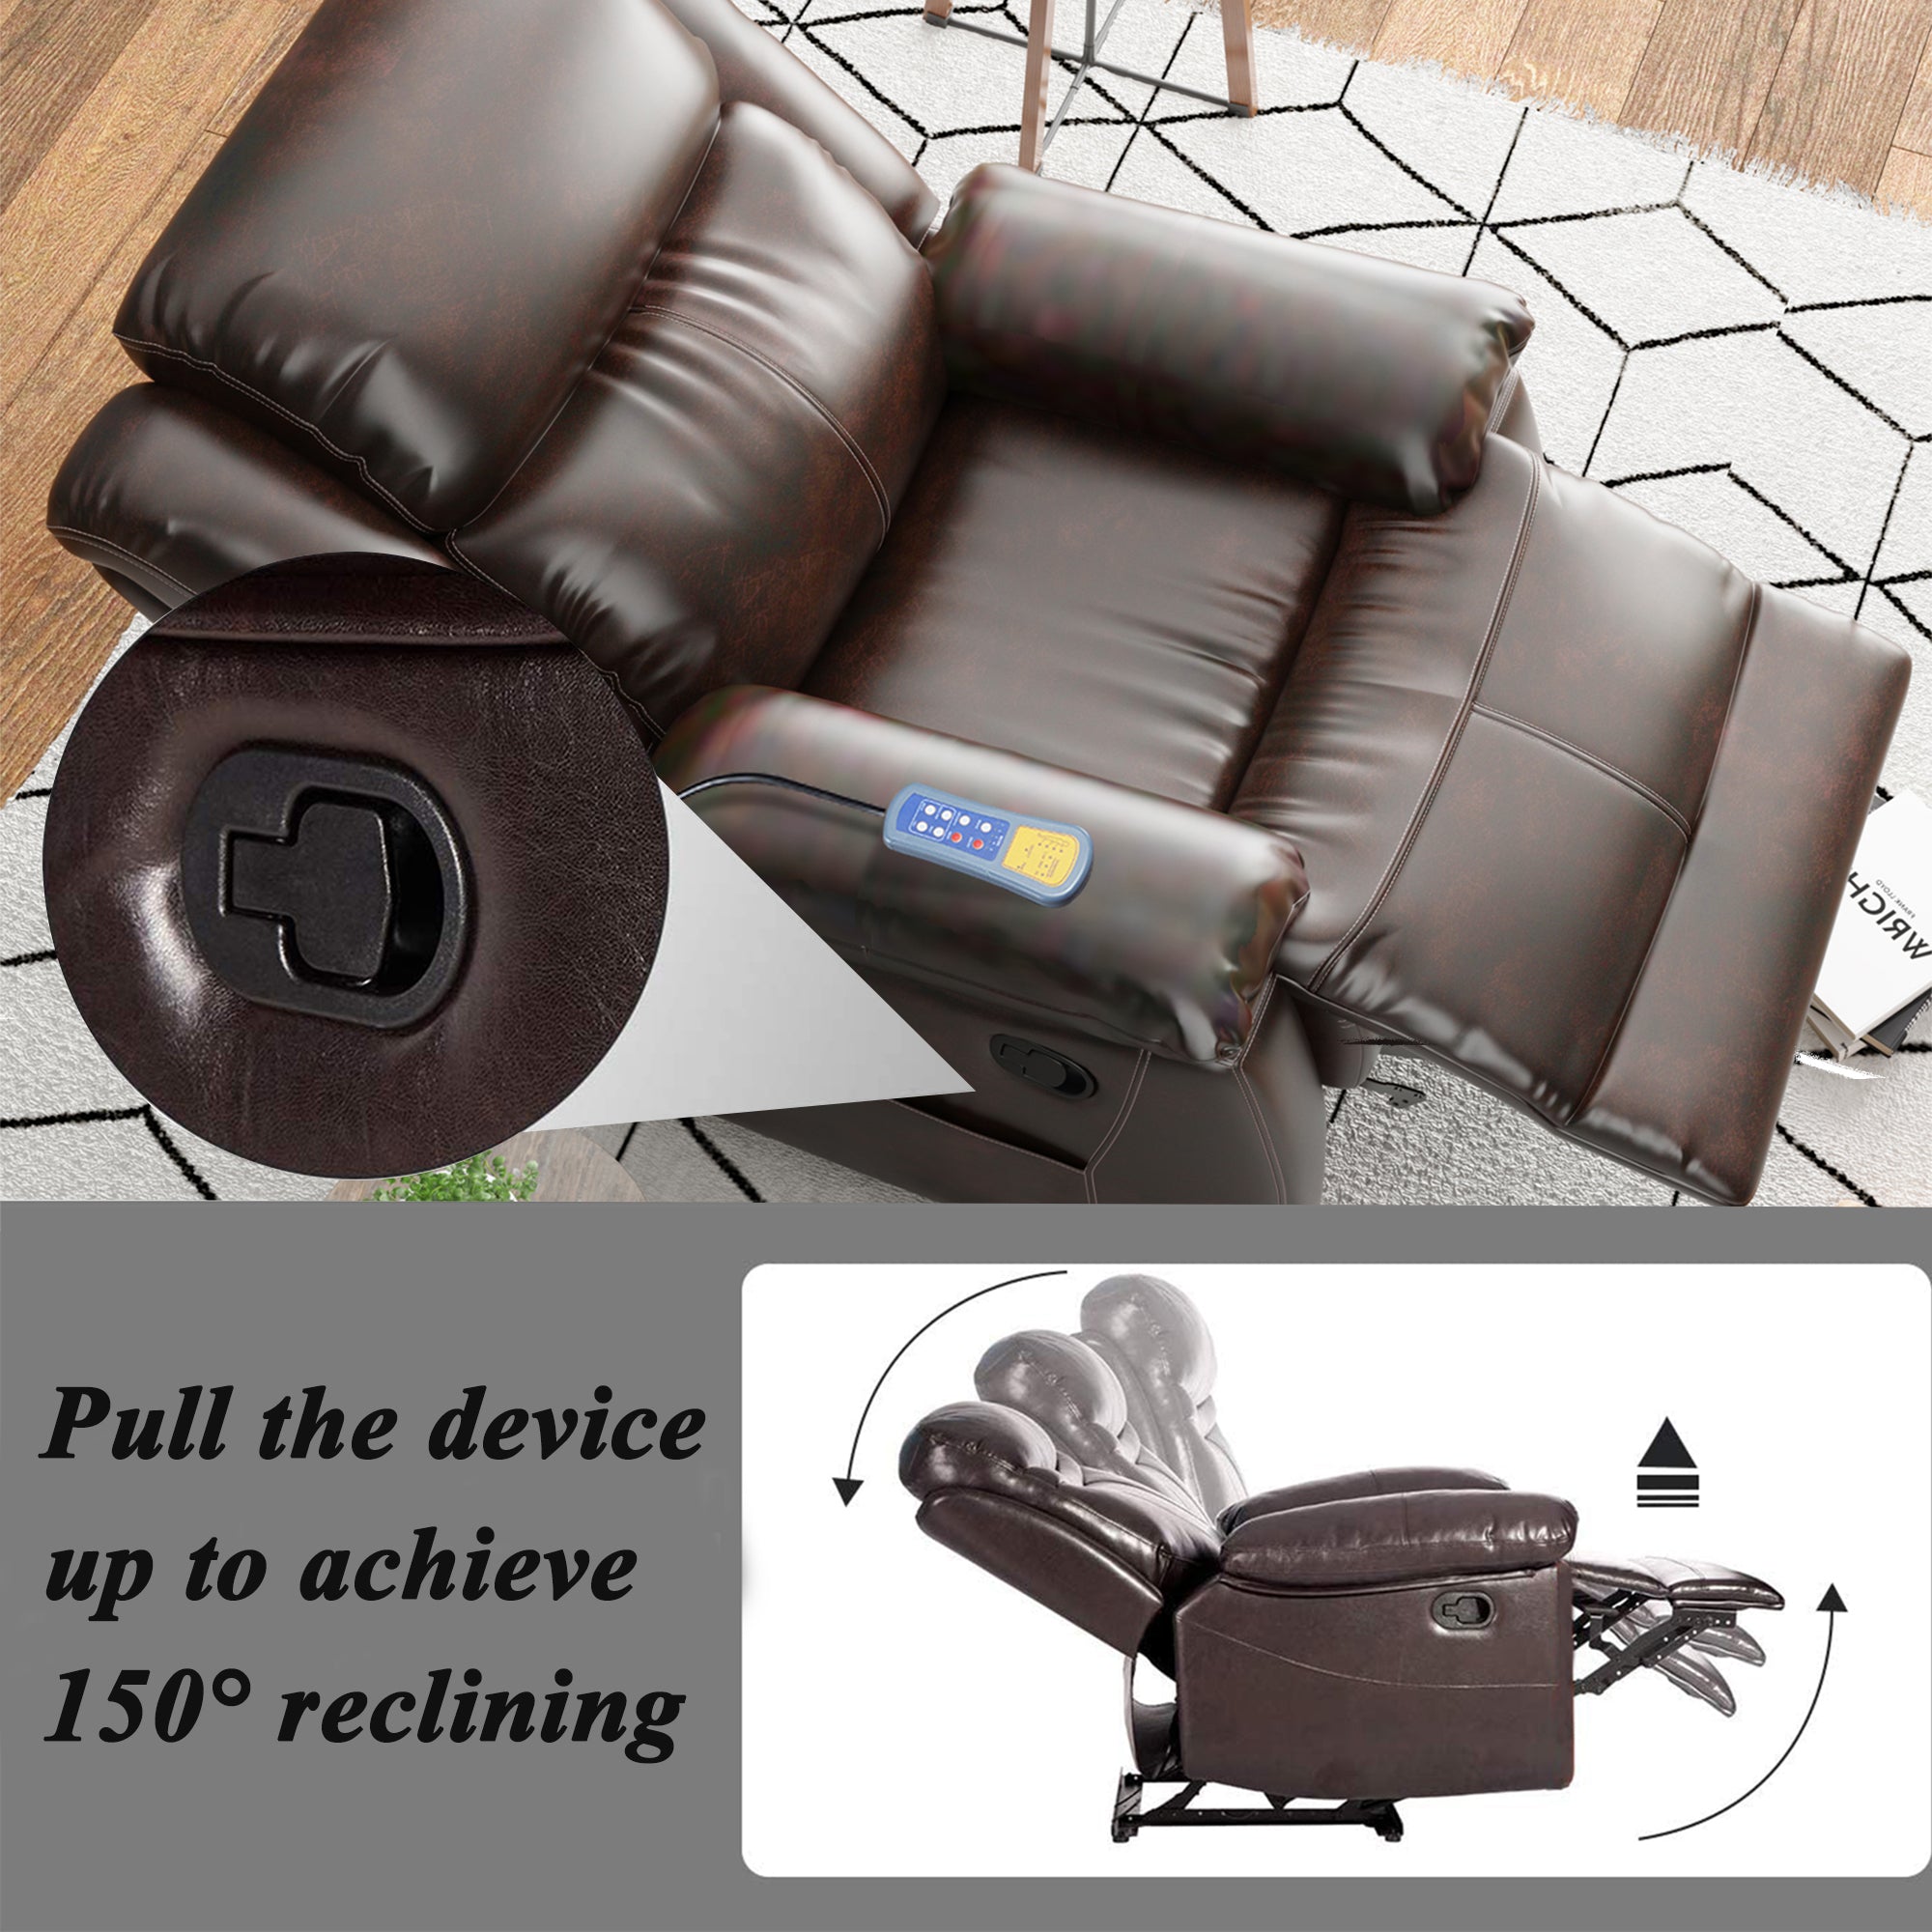 PU Leather Heated Massage Recliner Sofa Ergonomic Lounge with 8 Vibration Points